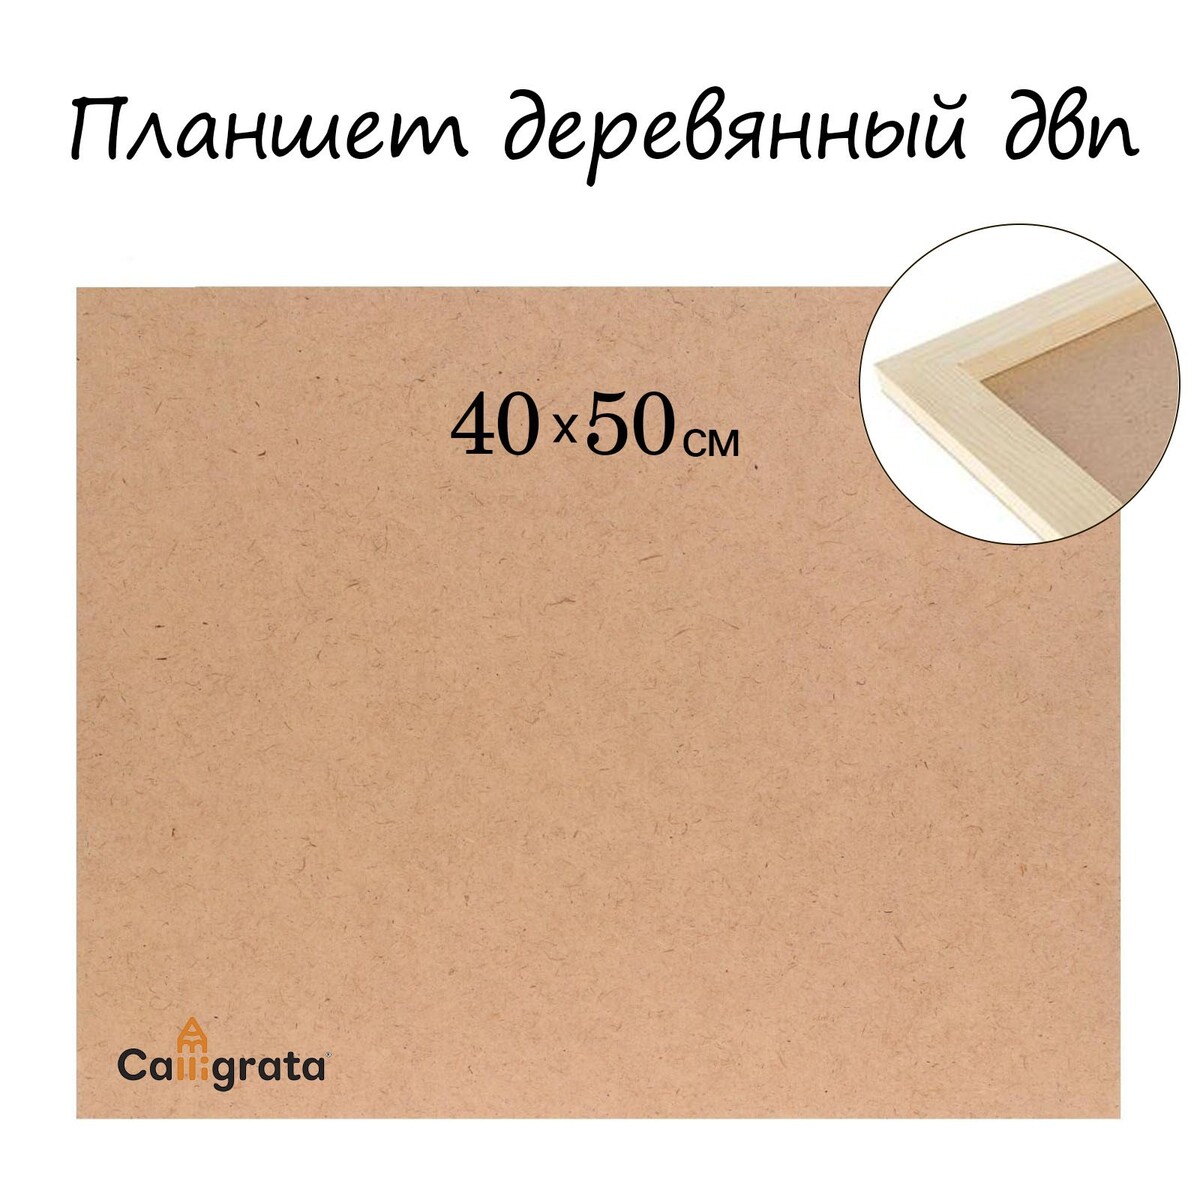 Планшет деревянный, 40 х 50 х 2 см, двп Calligrata 0975172 - фото 1